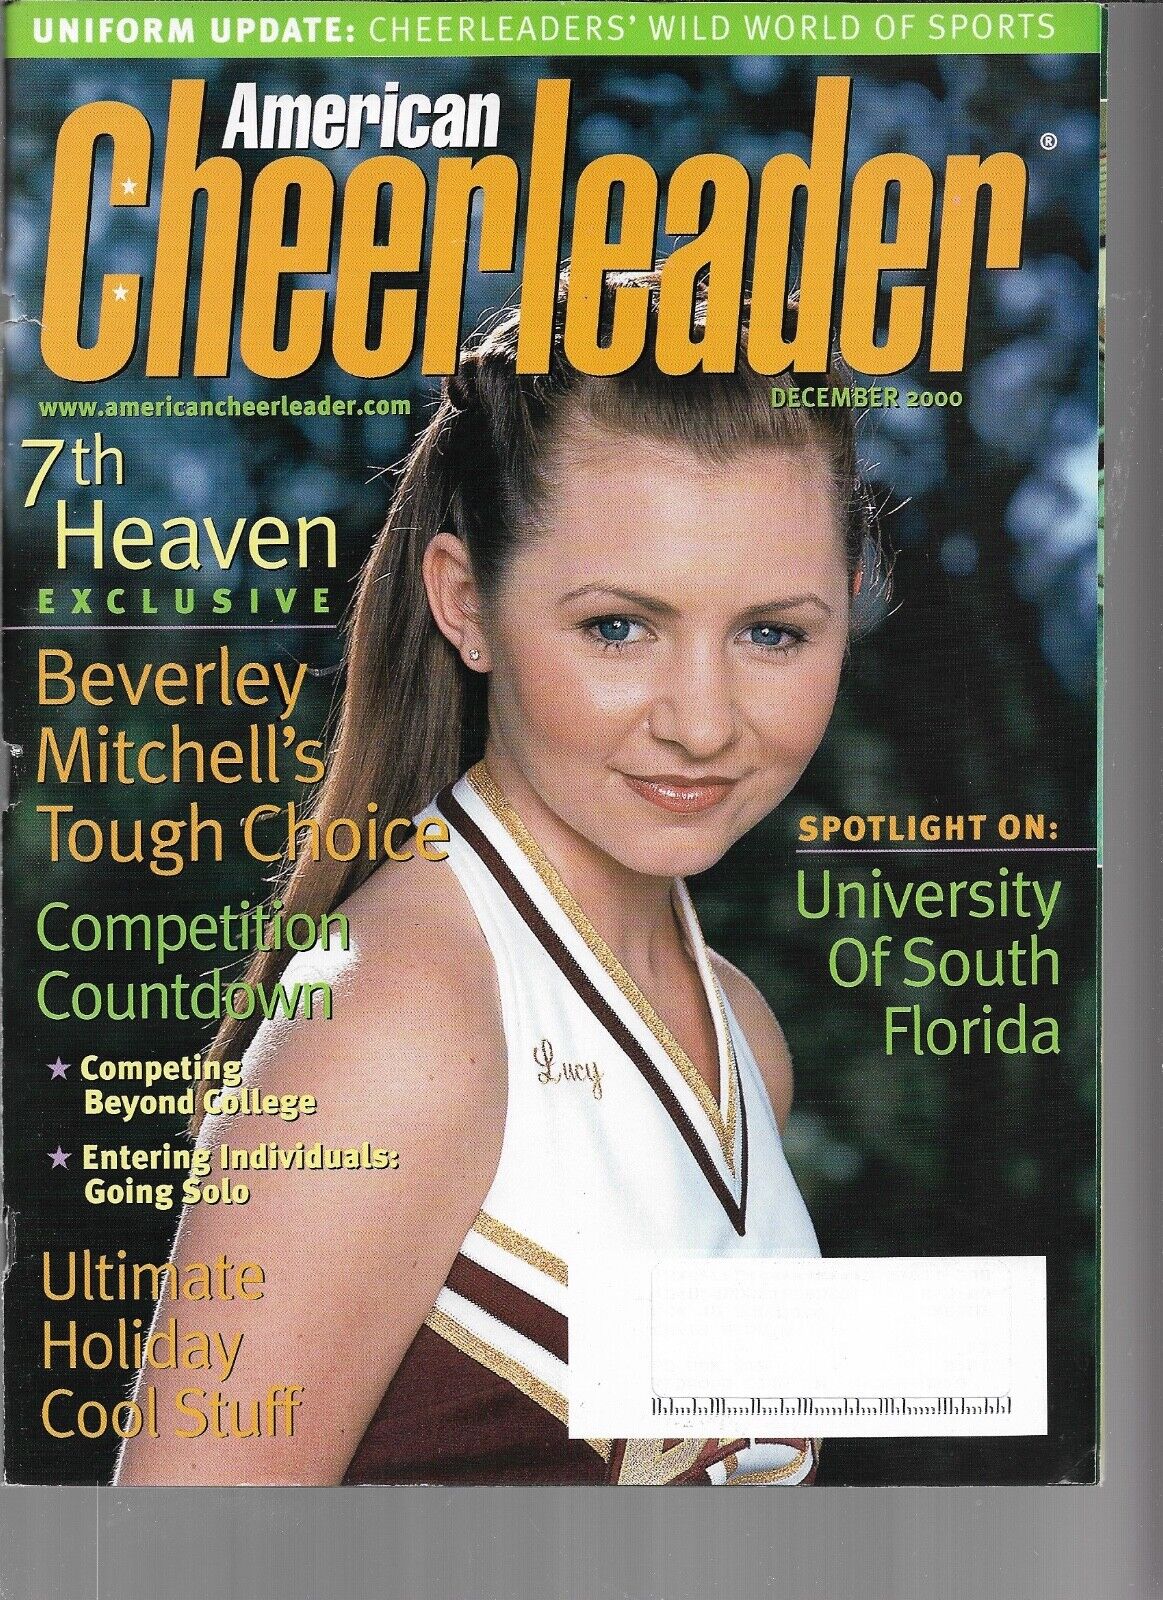 American Cheerleader December 2000 Uniform Update Cheerleader